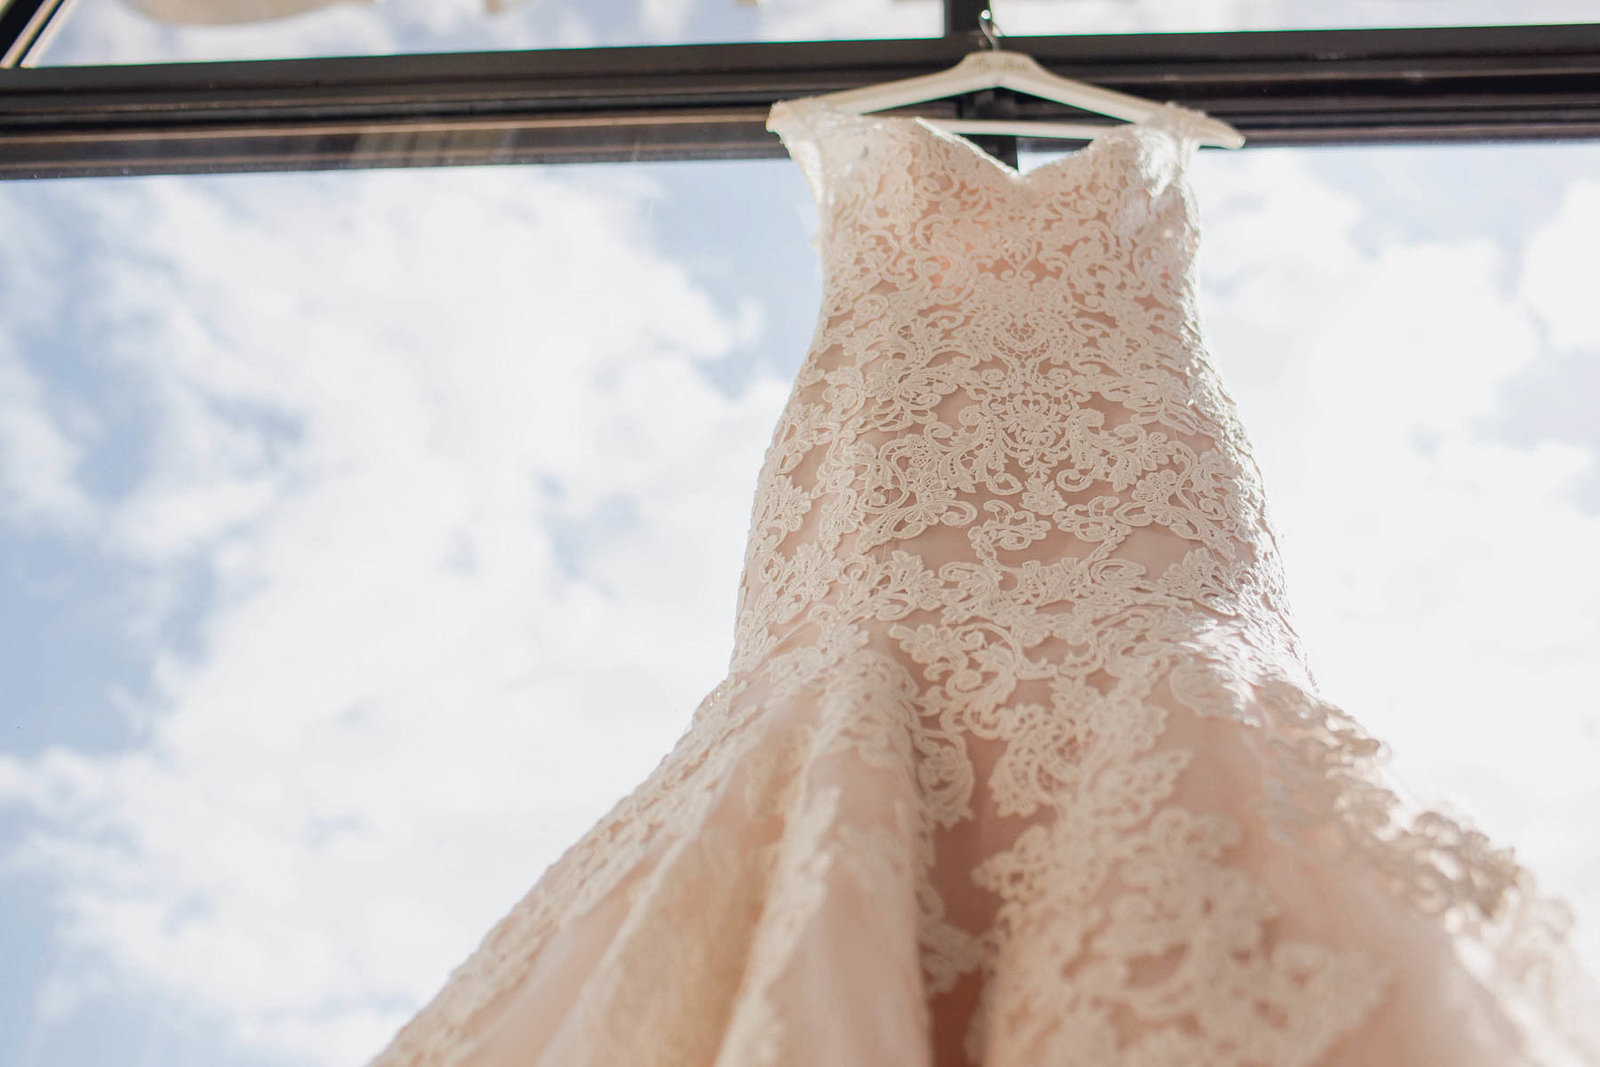 Dress hangs in window overlooking the water and boatyard, Destination wedding, Hyatt Regency, Sarasota, Florida. Kate Timbers Photography.